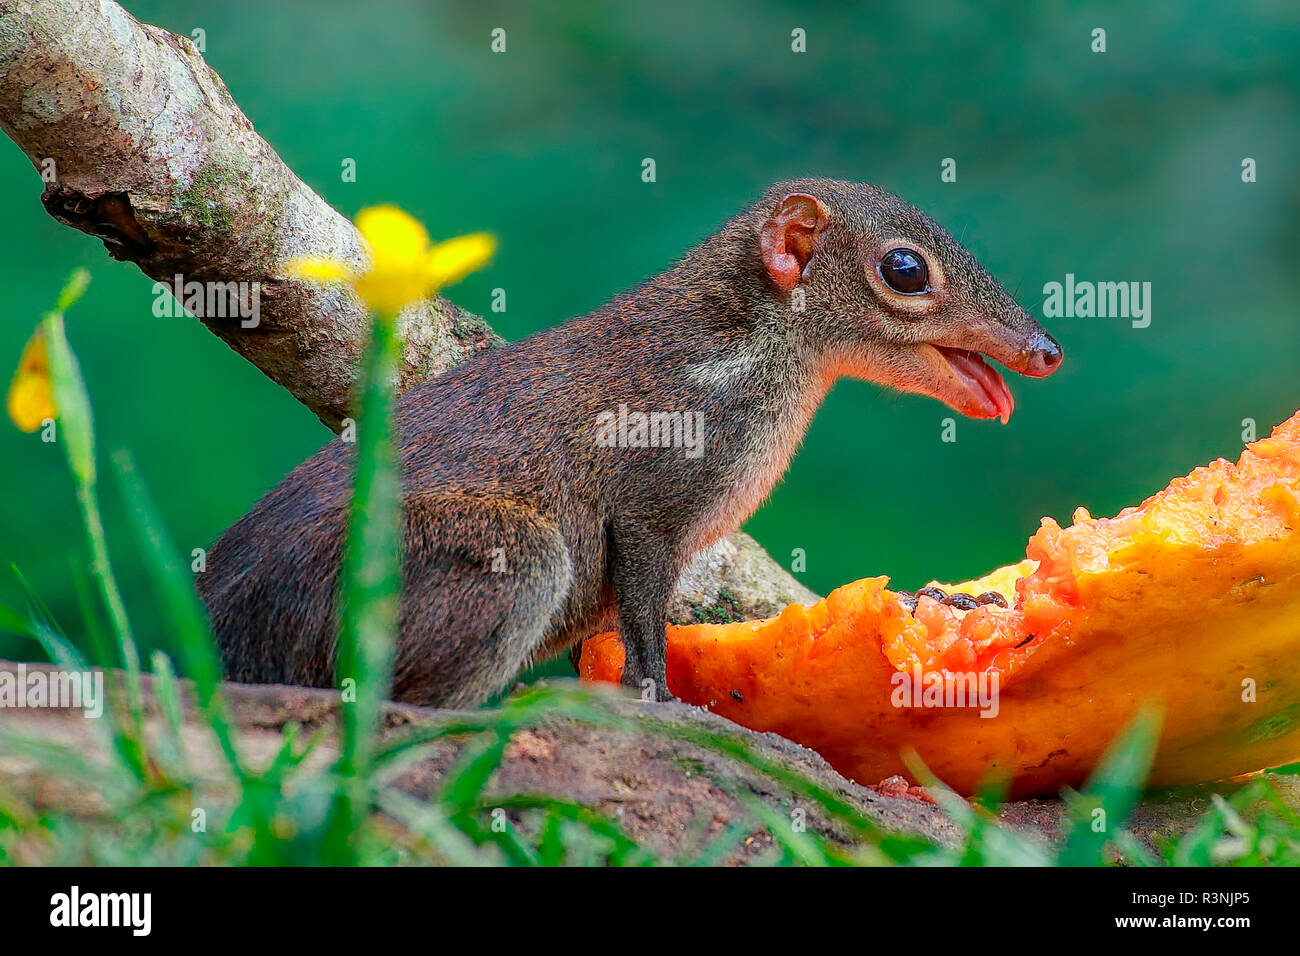 A common treeshrew (Tupaiidae - Tupaia glis) eating papaya fruit. Stock Photo